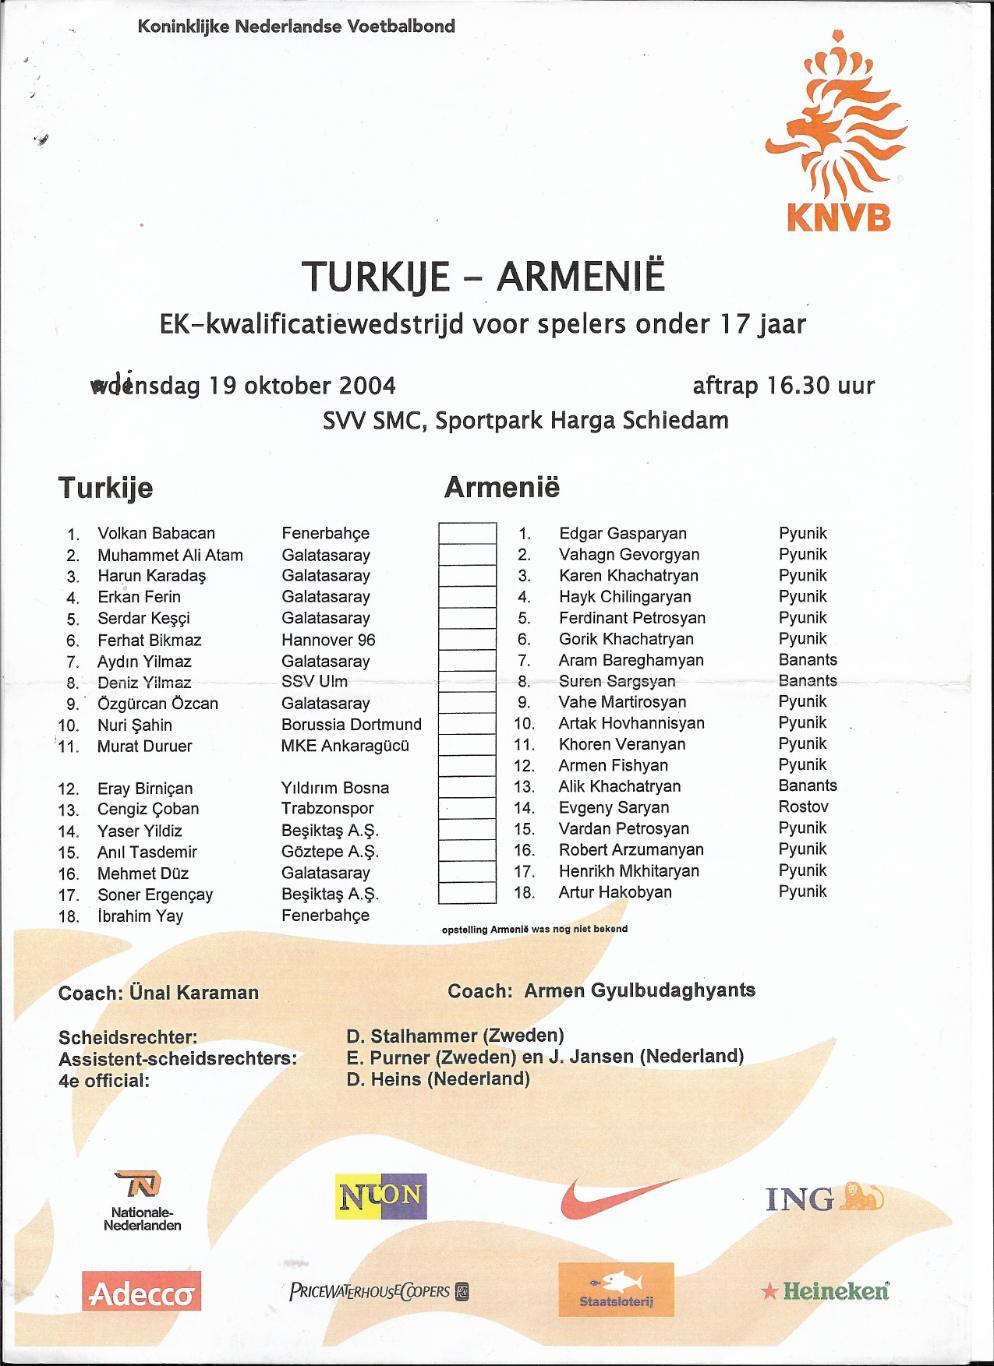 TURKIJE v ARMENIE_19.10.2004_kwalifica tiewedstrijd_17-jaar- старт._протокол